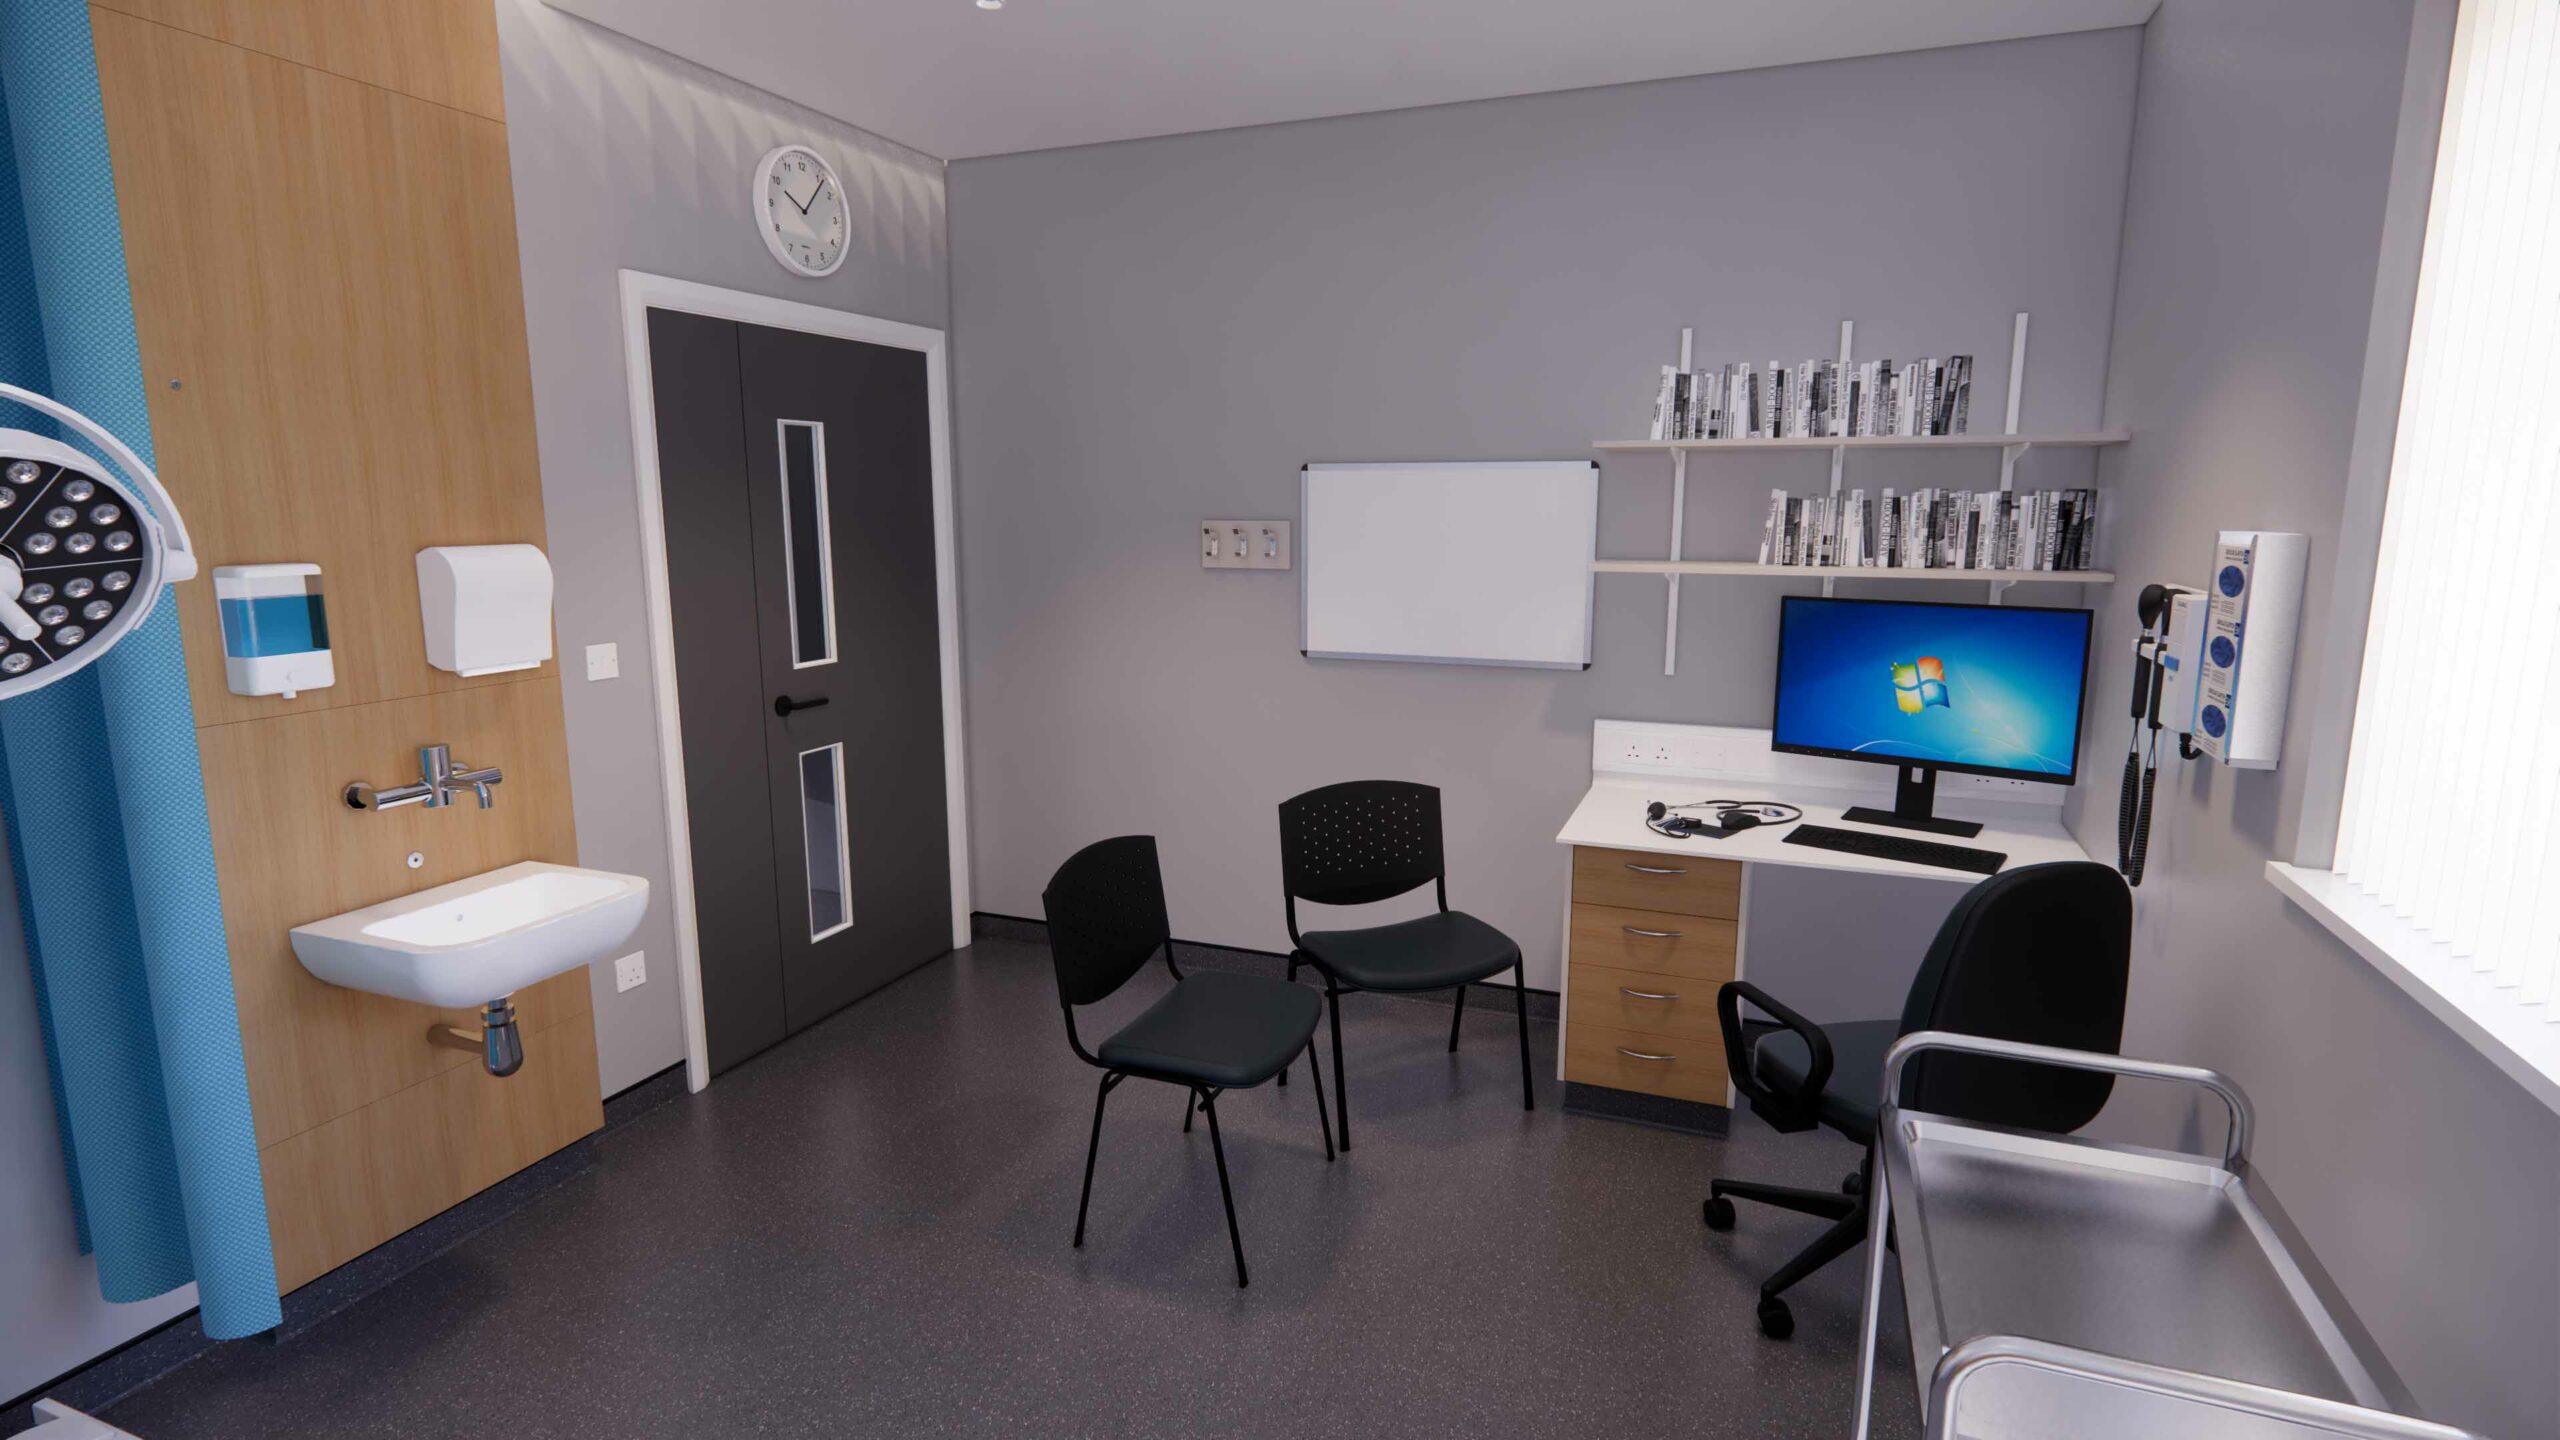 Exemplar Room – Treatment Room